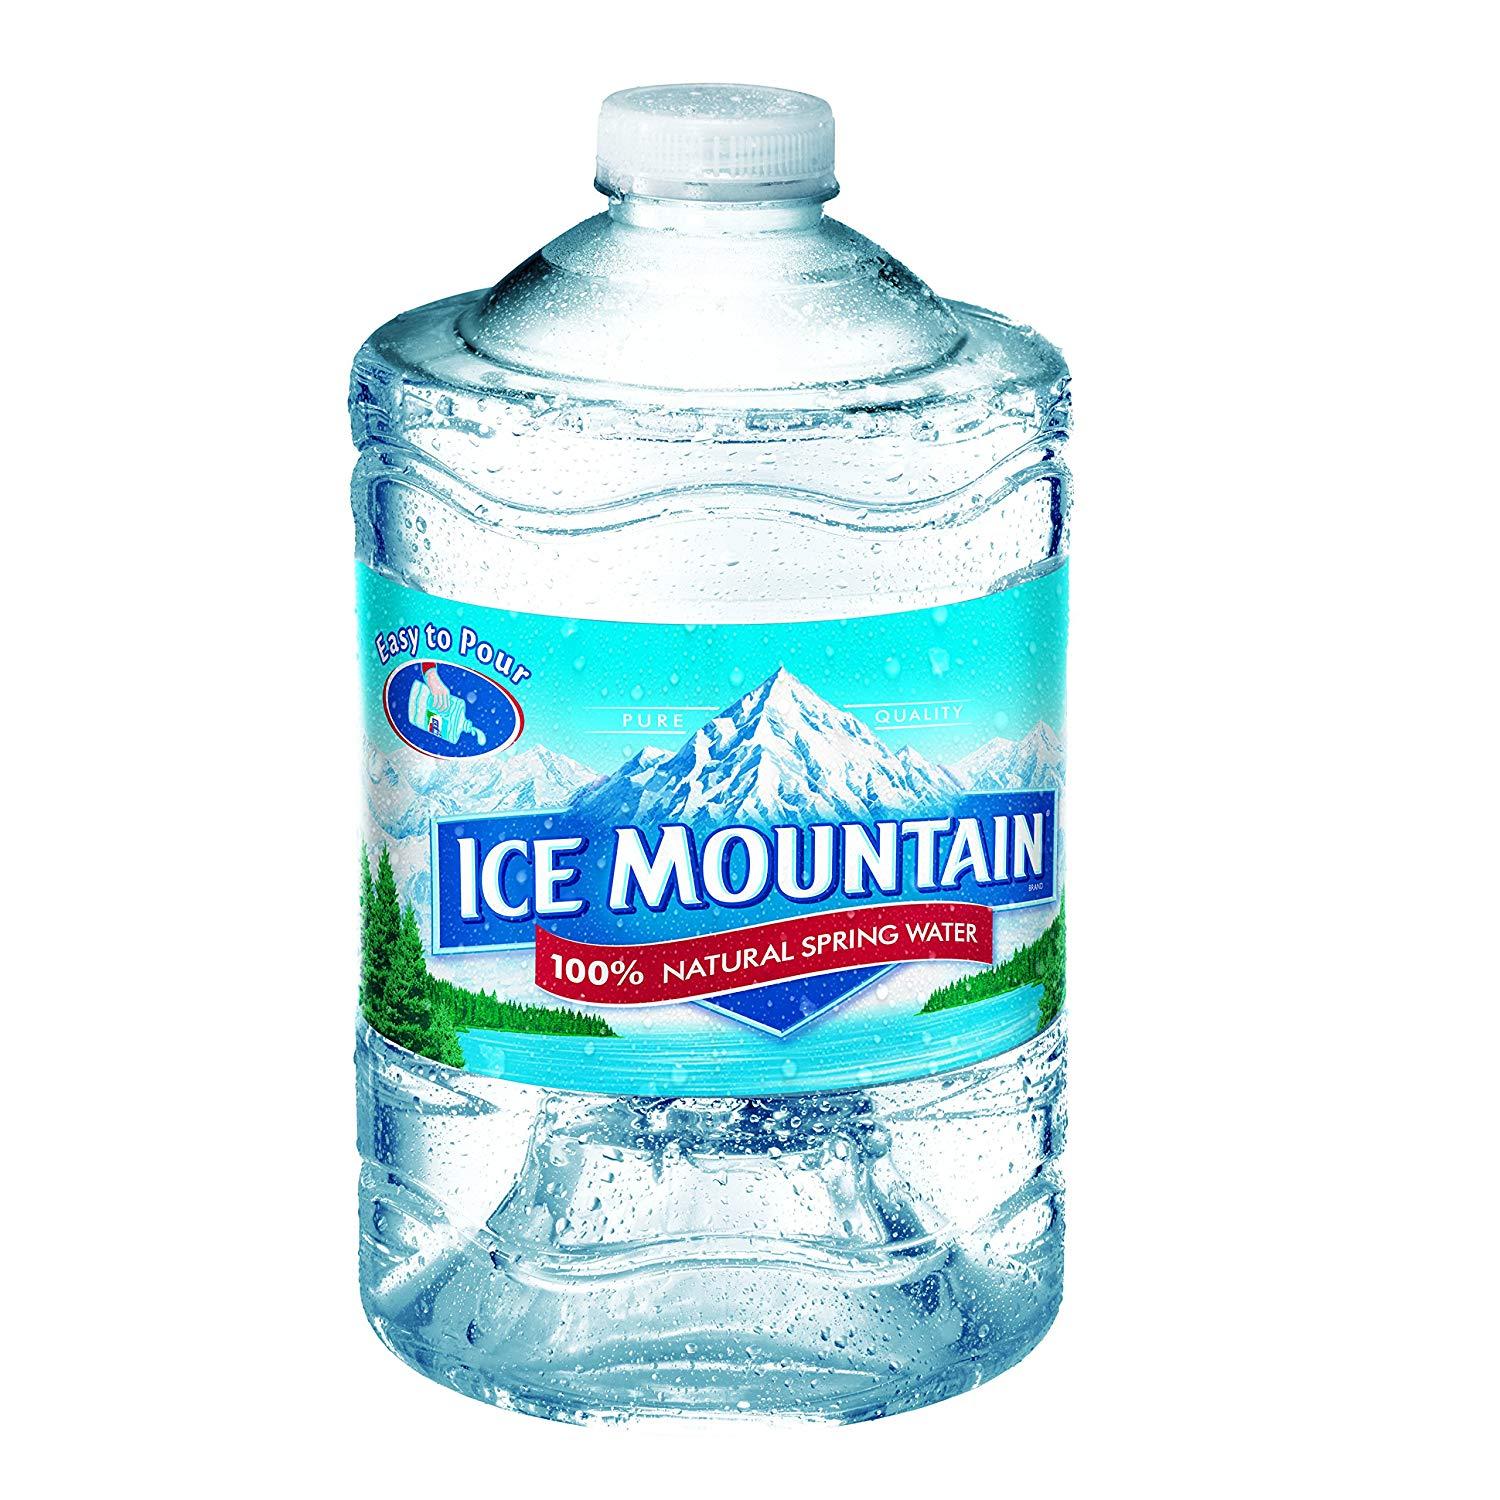 Water Bottle Ice Mountain Logo - Amazon.com : Ice Mountain 100% Natural Spring Water, 8 Ounce Mini